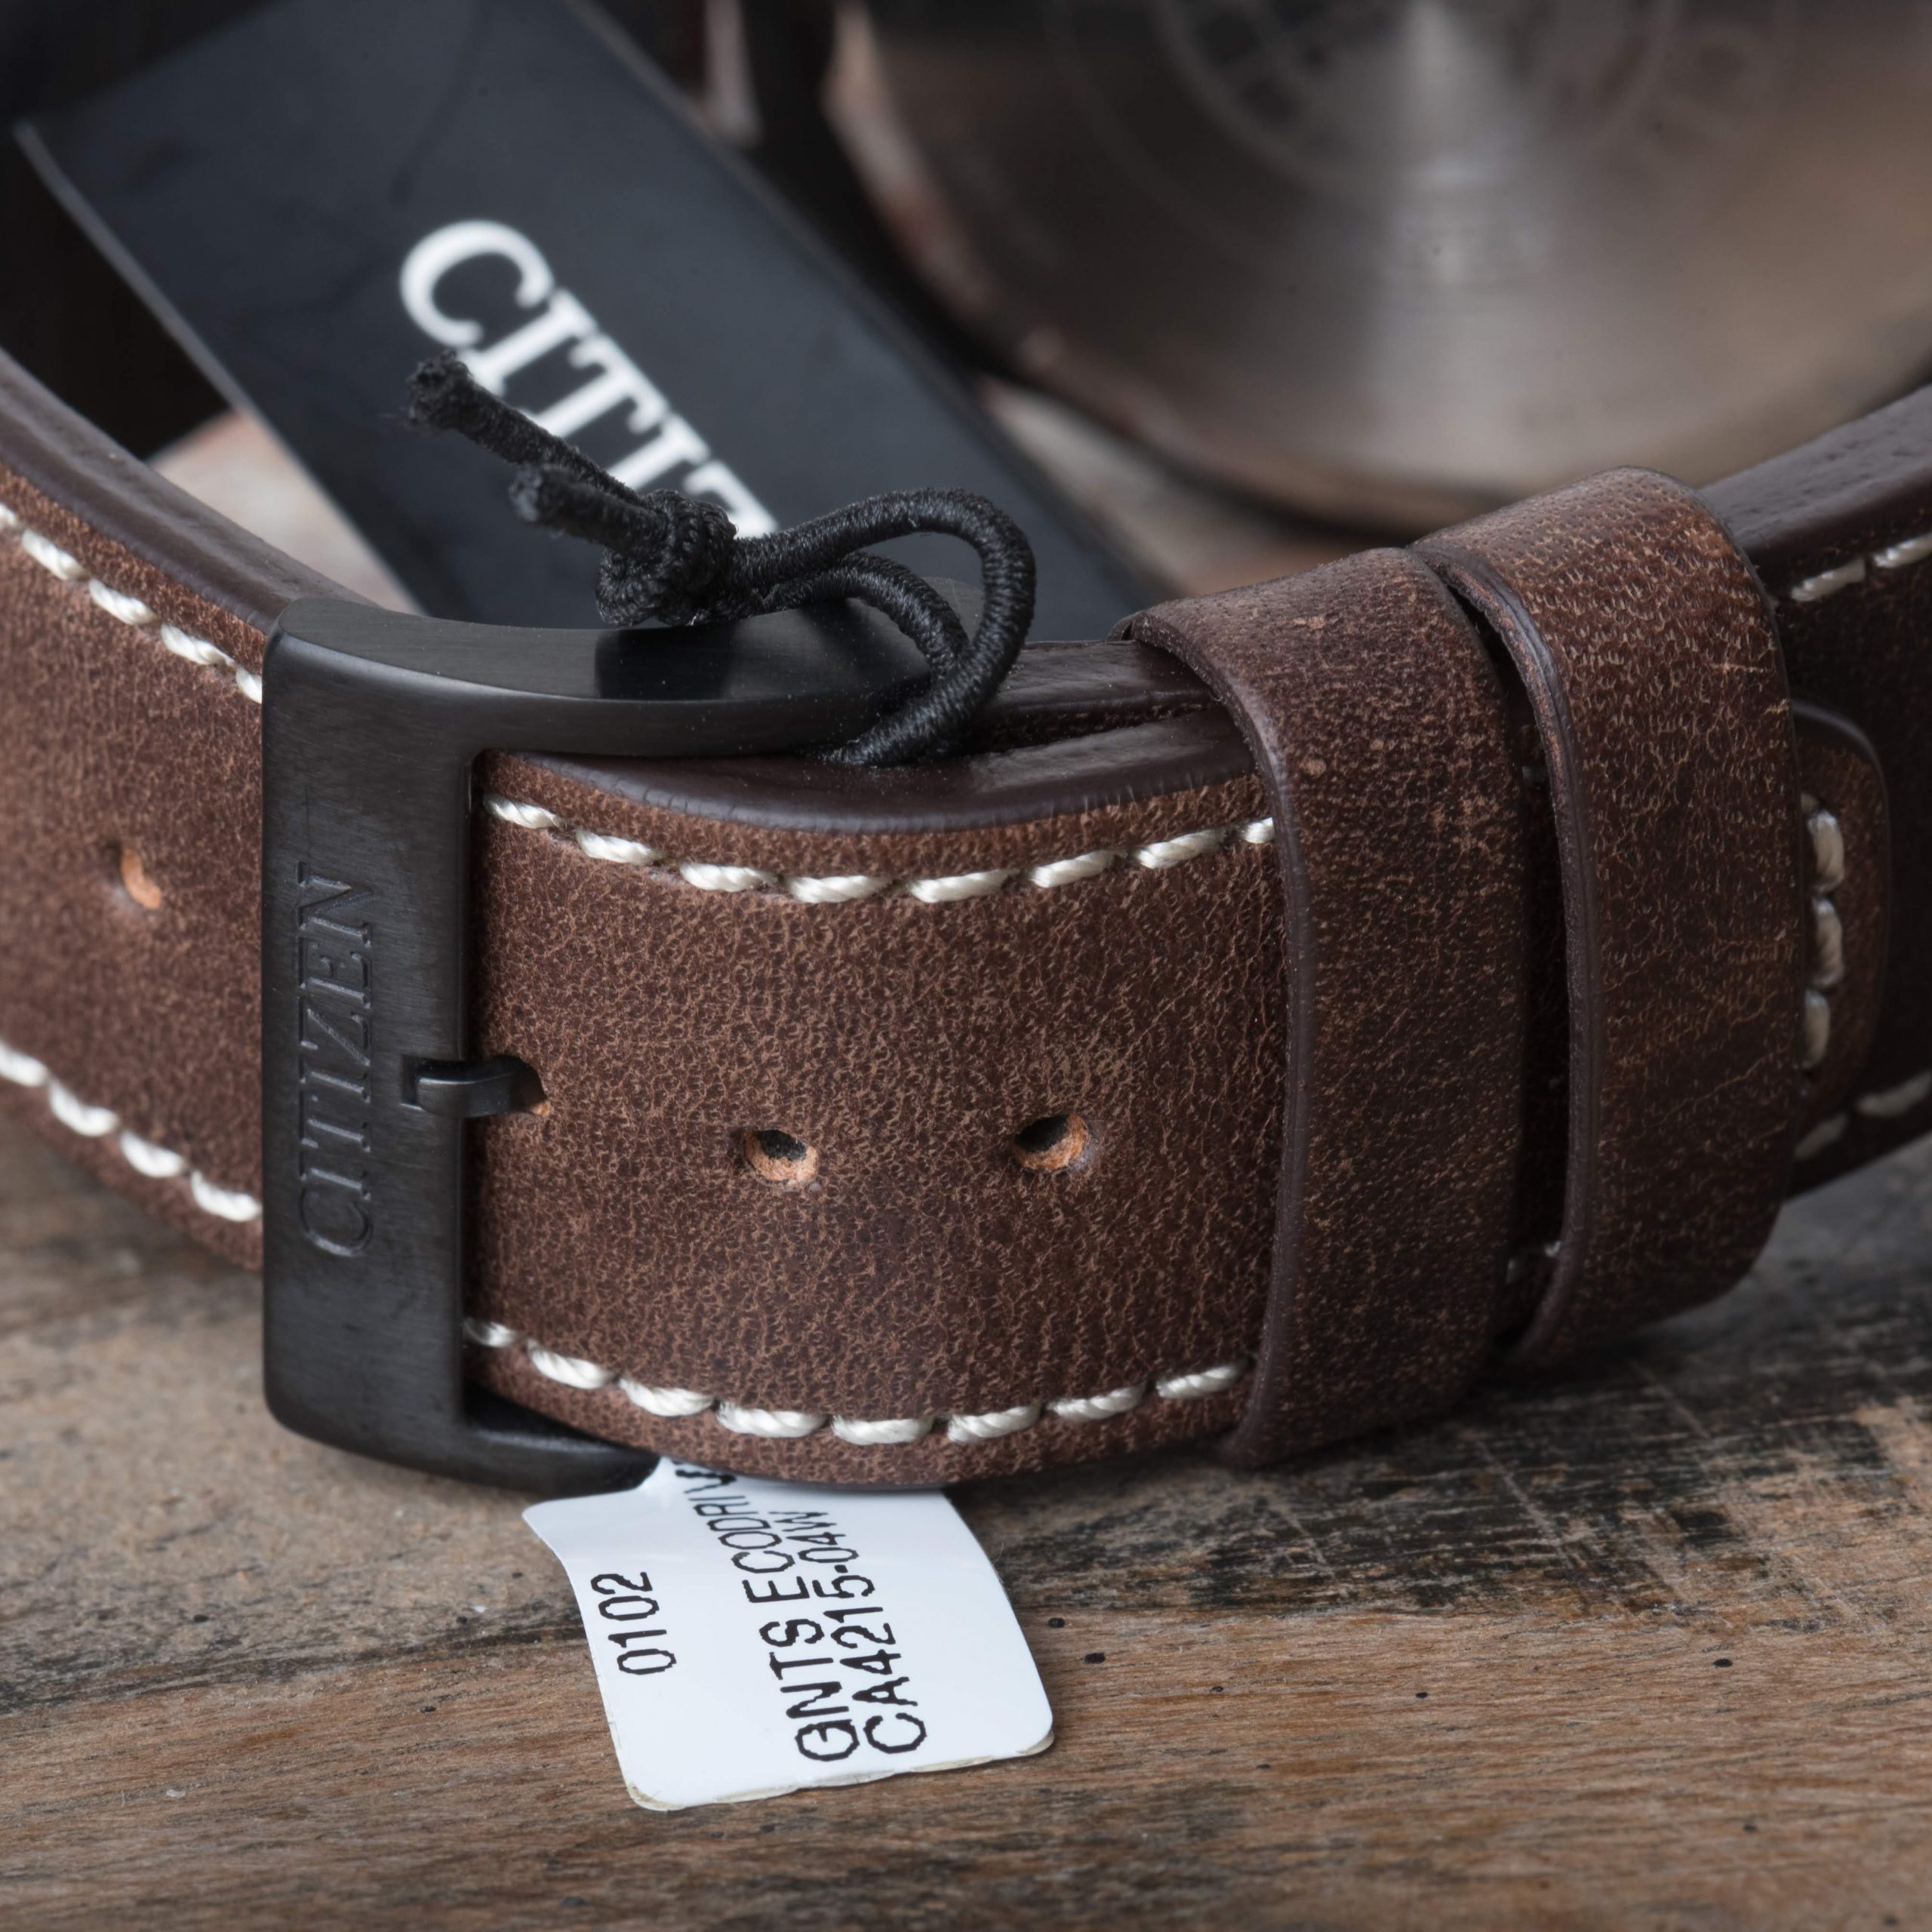 Citizen Eco-Drive Aviator Chronograph Date Men's Watch CA4215-04W